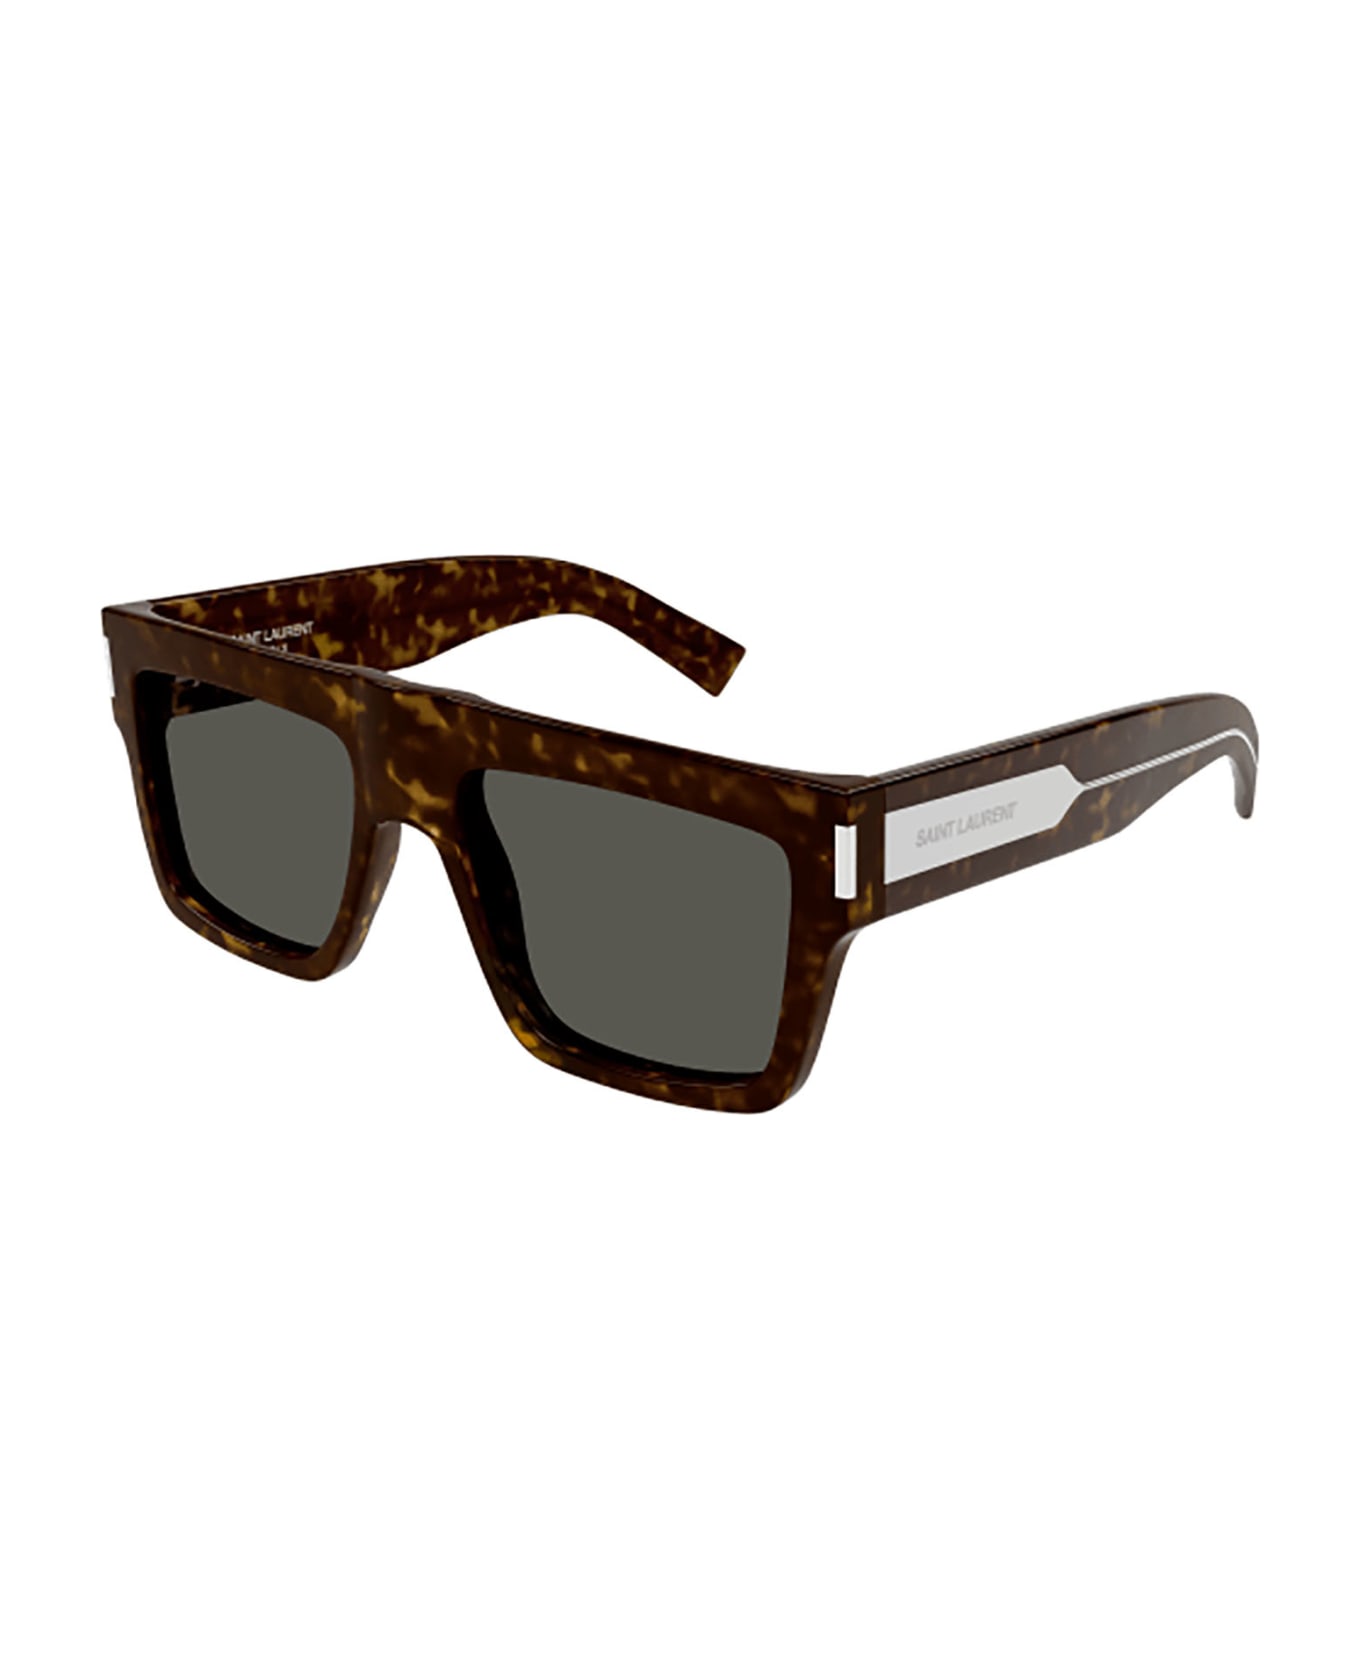 Saint Laurent Eyewear Sl 628 Sunglasses - 003 havana crystal grey